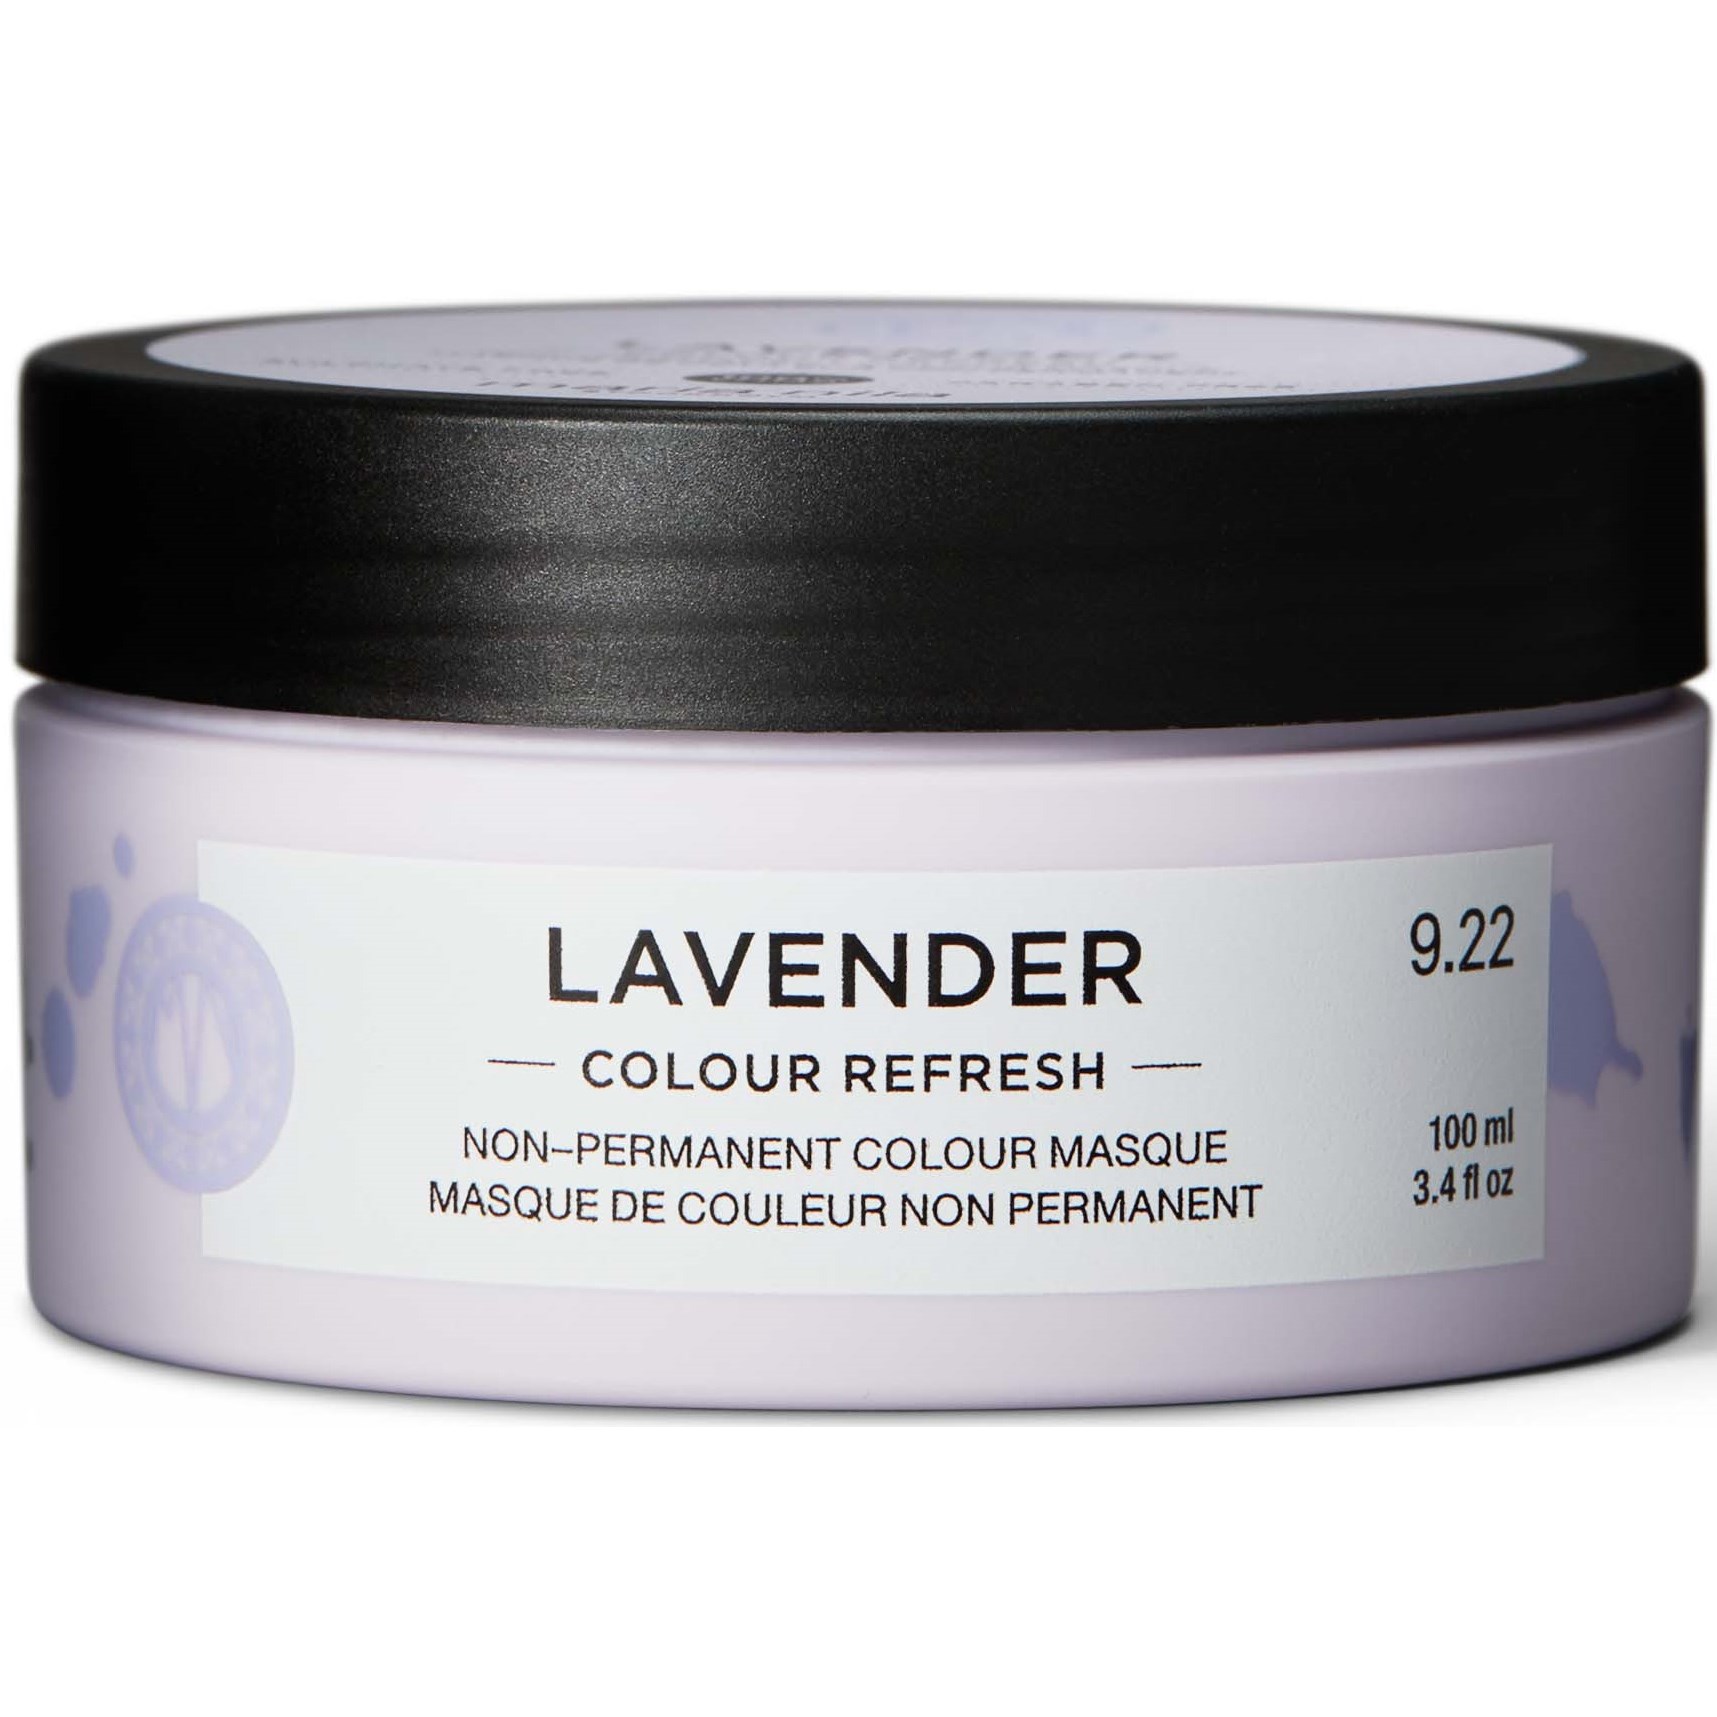 maria nila Colour Refresh Lavender